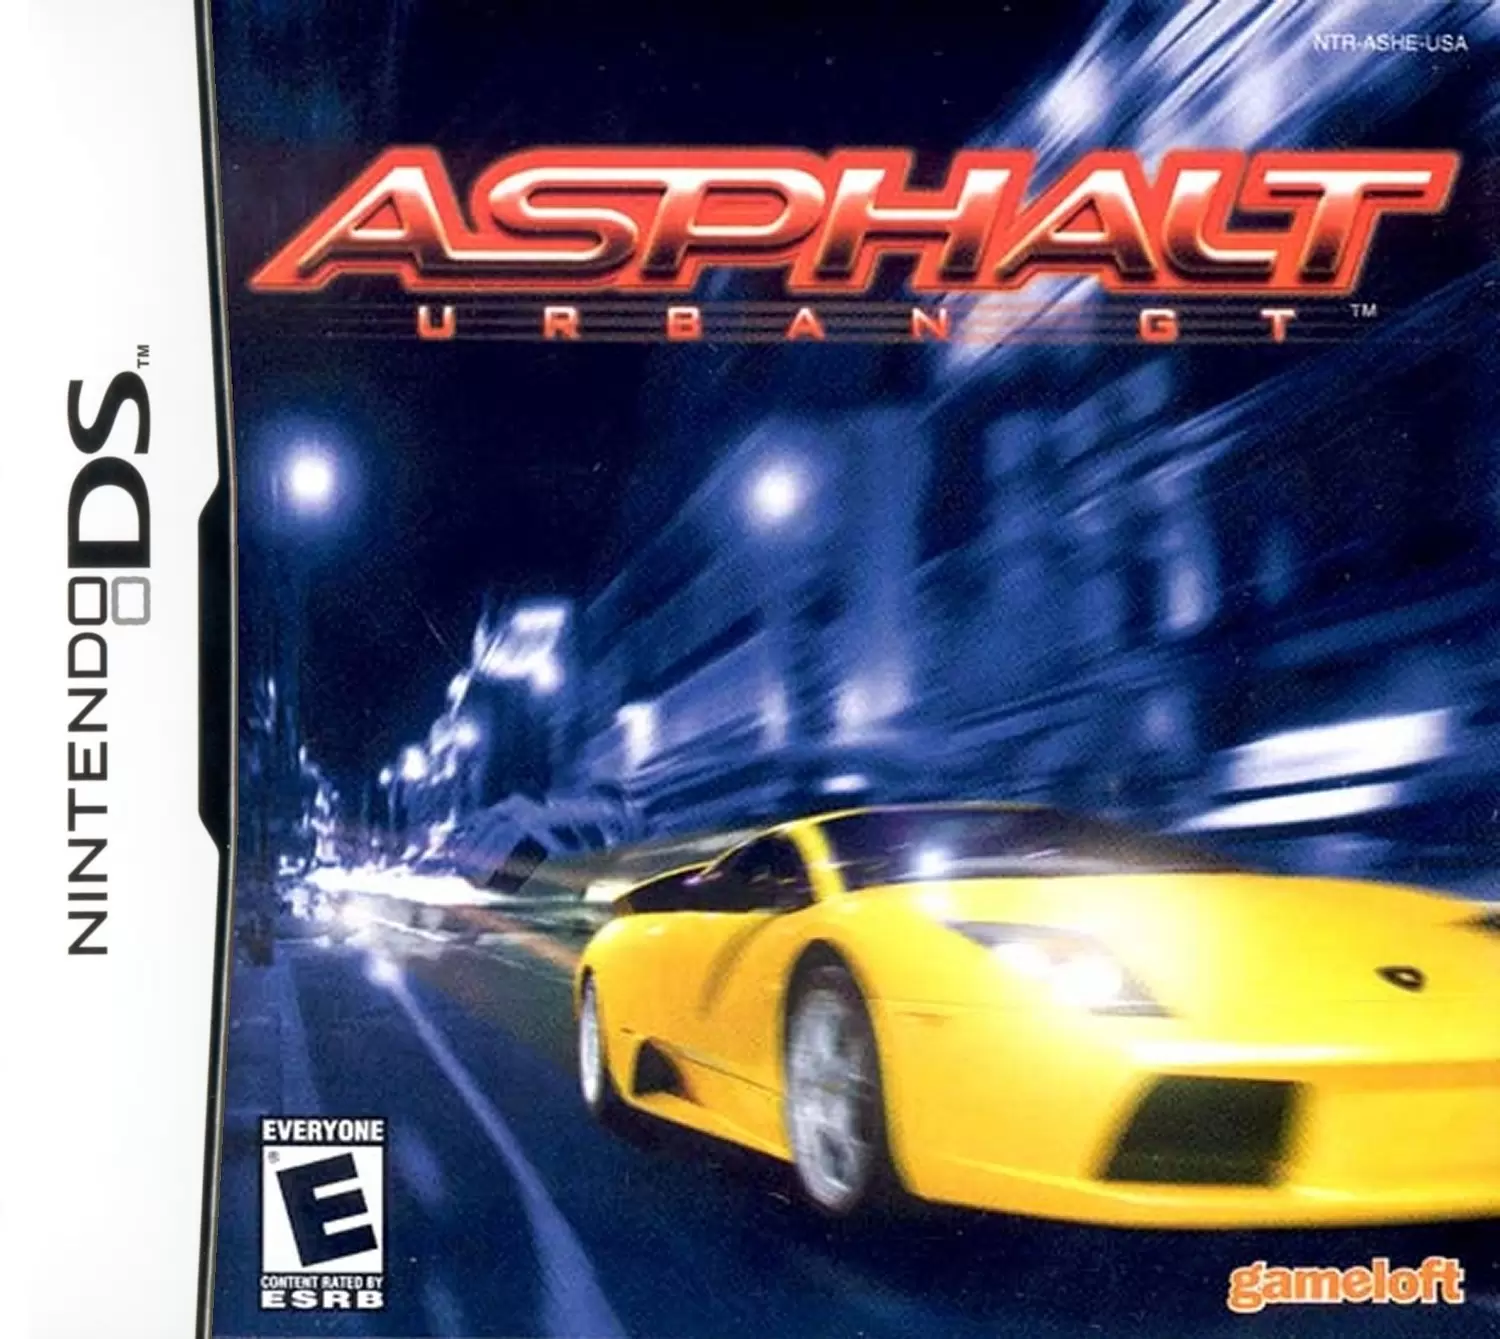 Nintendo DS Games - Asphalt Urban GT